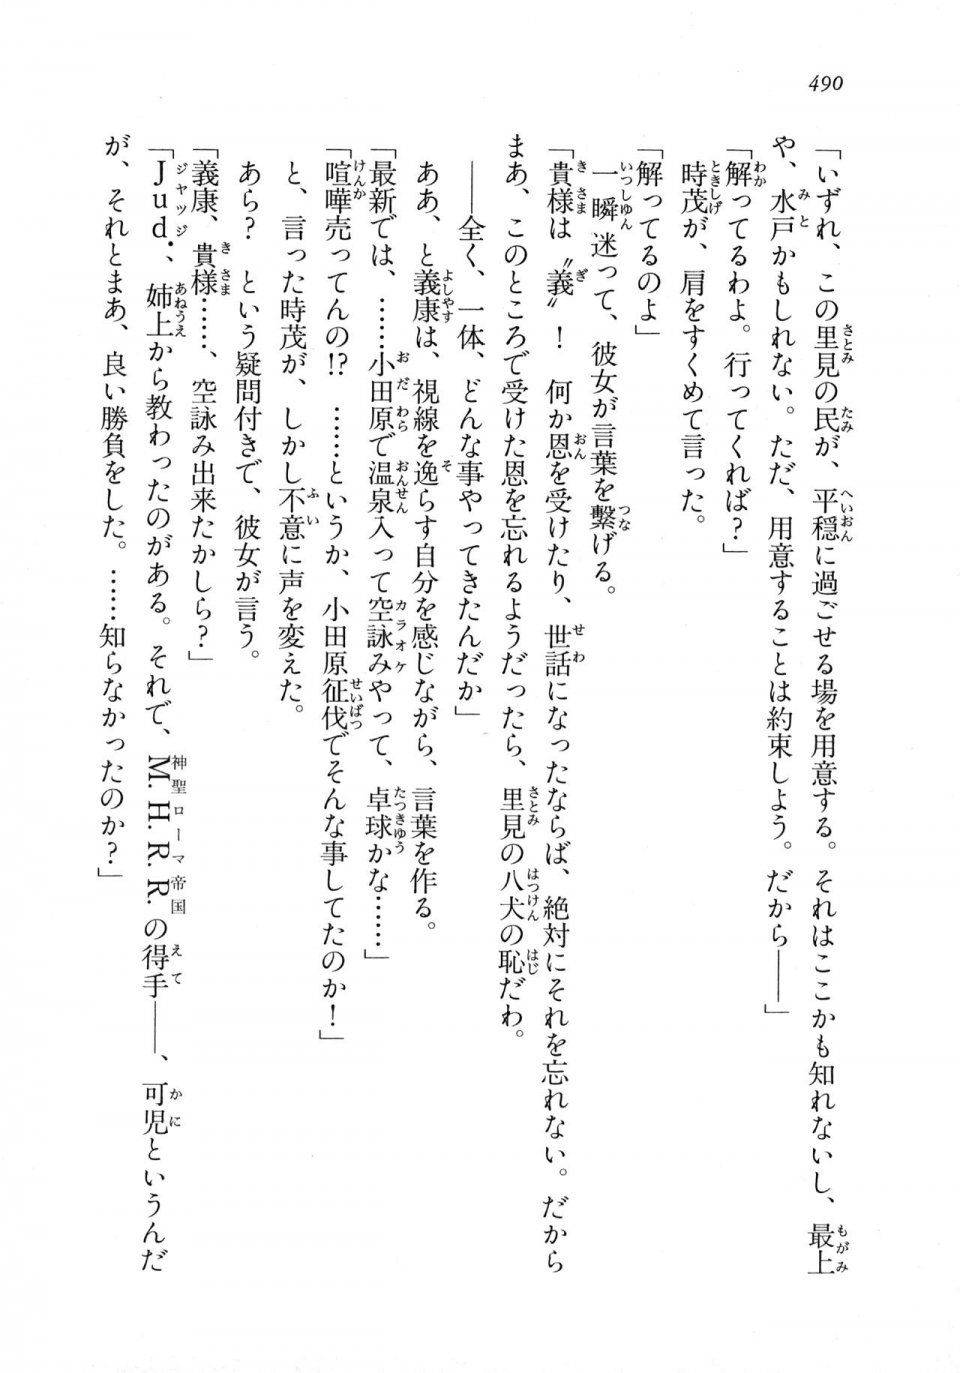 Kyoukai Senjou no Horizon LN Vol 18(7C) Part 1 - Photo #490